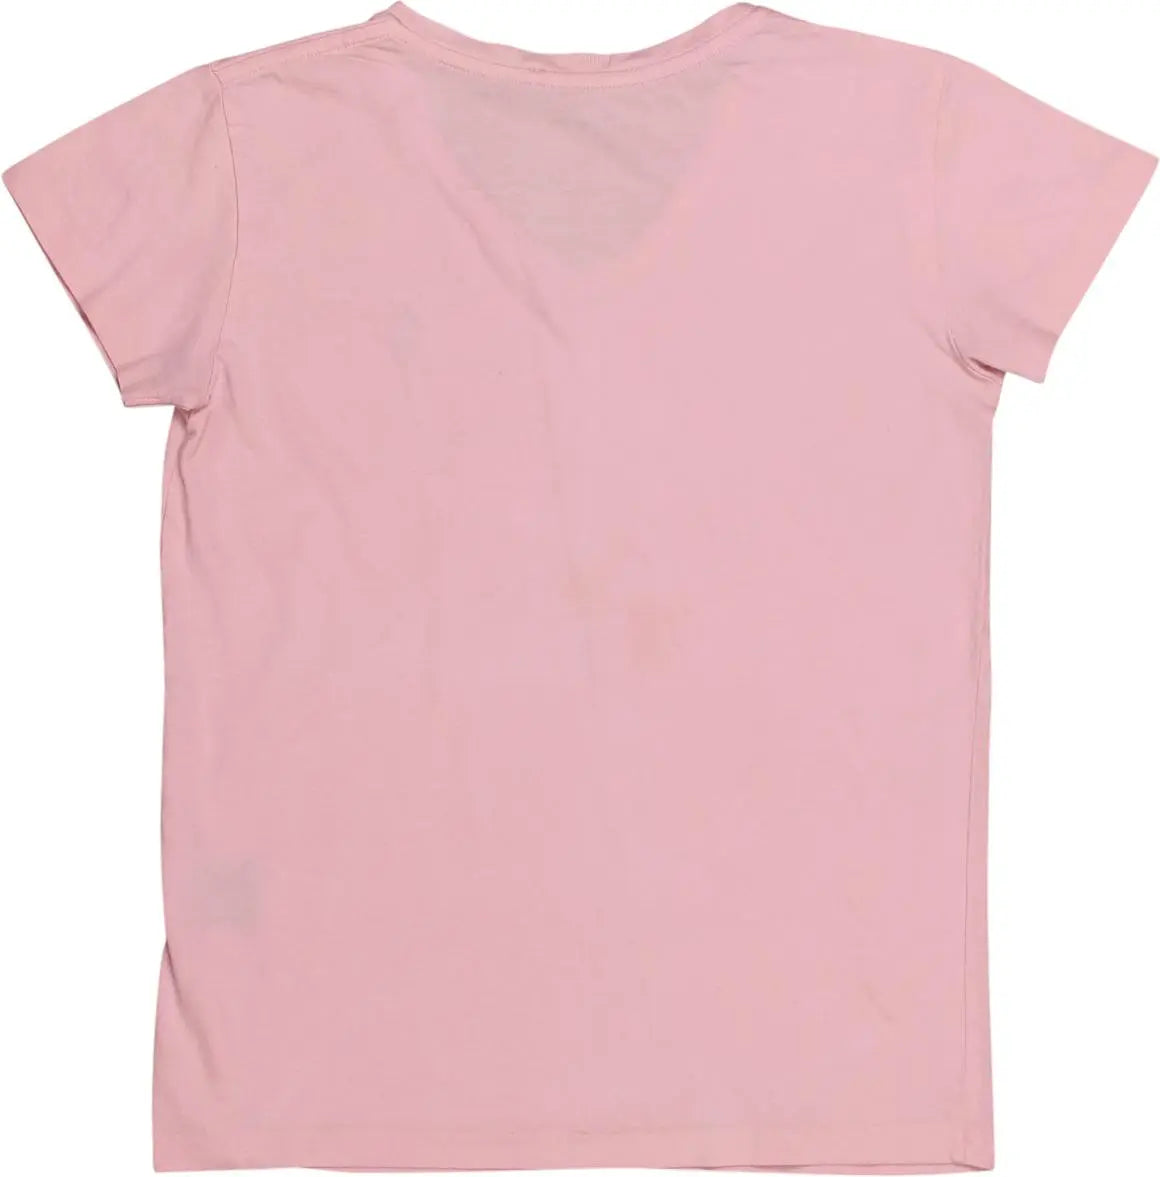 Ralph Lauren - Pink T-shirt by Ralph Lauren Sport- ThriftTale.com - Vintage and second handclothing